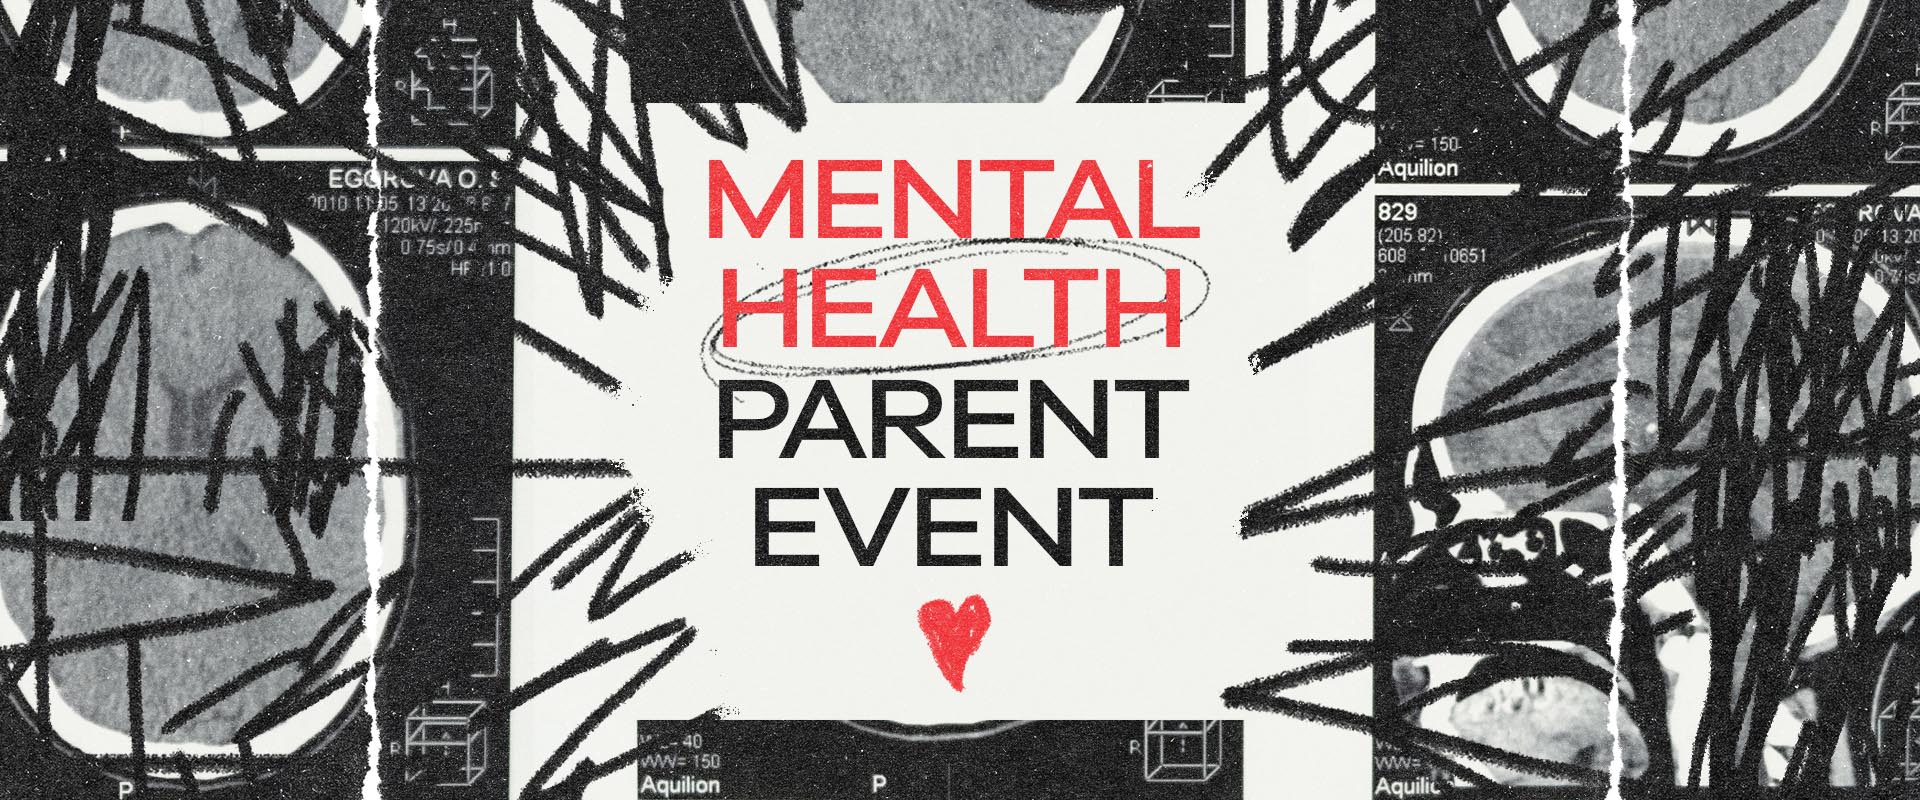 Mental Health Parent Event image